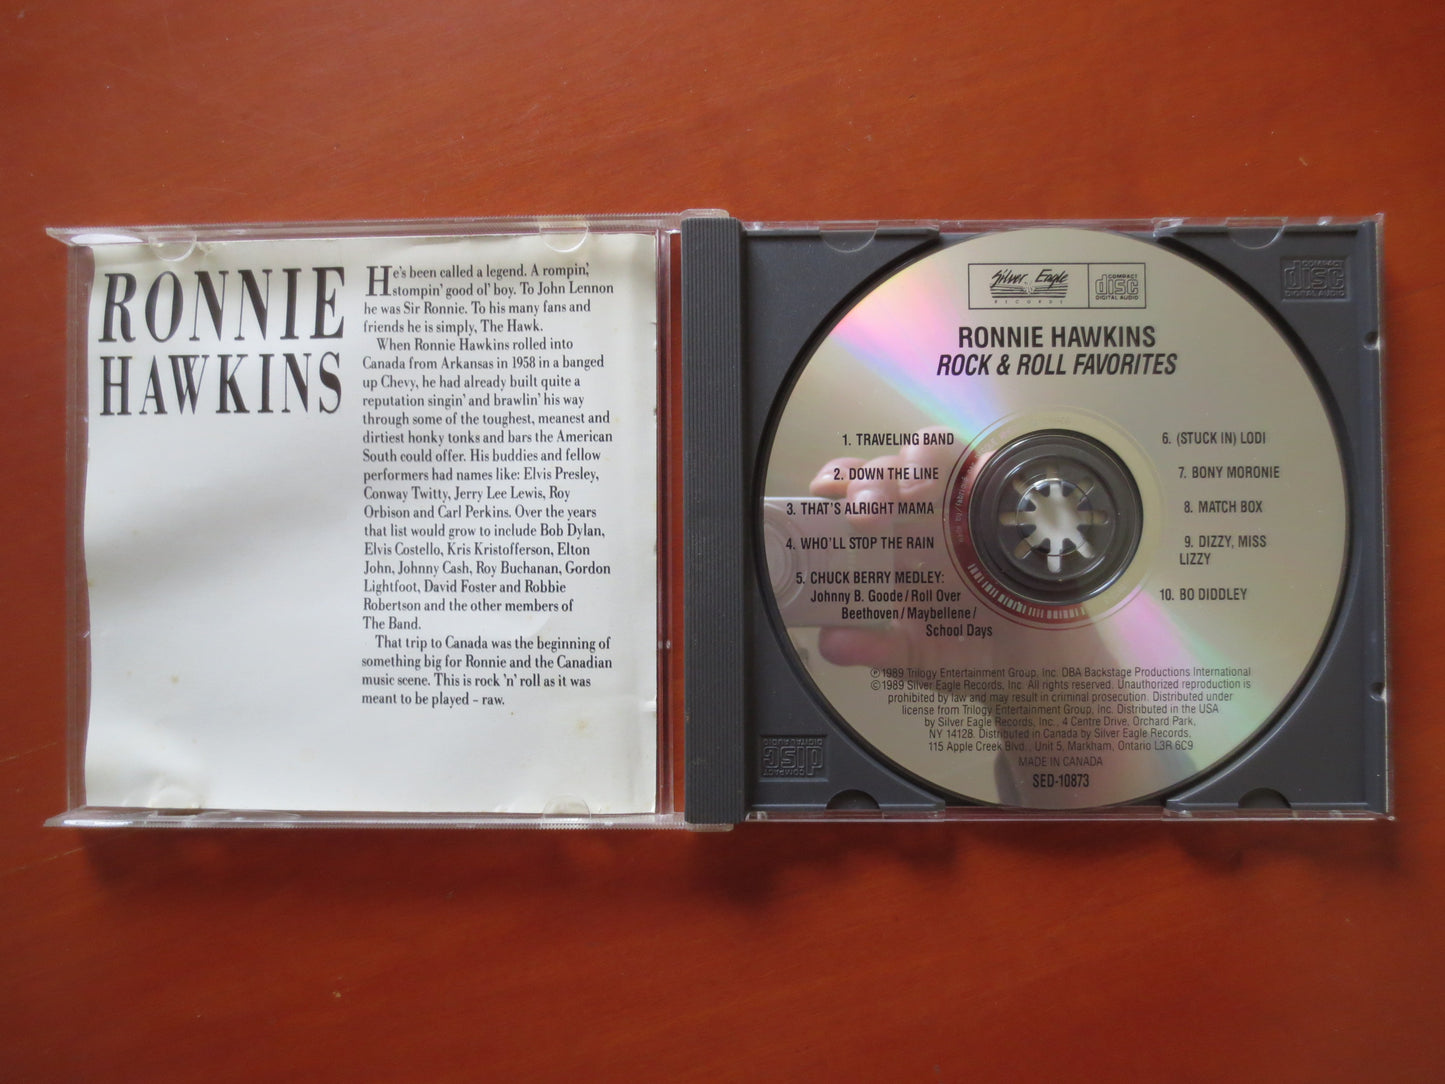 RONNIE HAWKINS, GREATEST Hits, Ronnie Hawkins Cd, Ronnie Hawkins Lp, Vintage Compact Disc, Music Cd, Pop Cd, 1989 Compact Disc